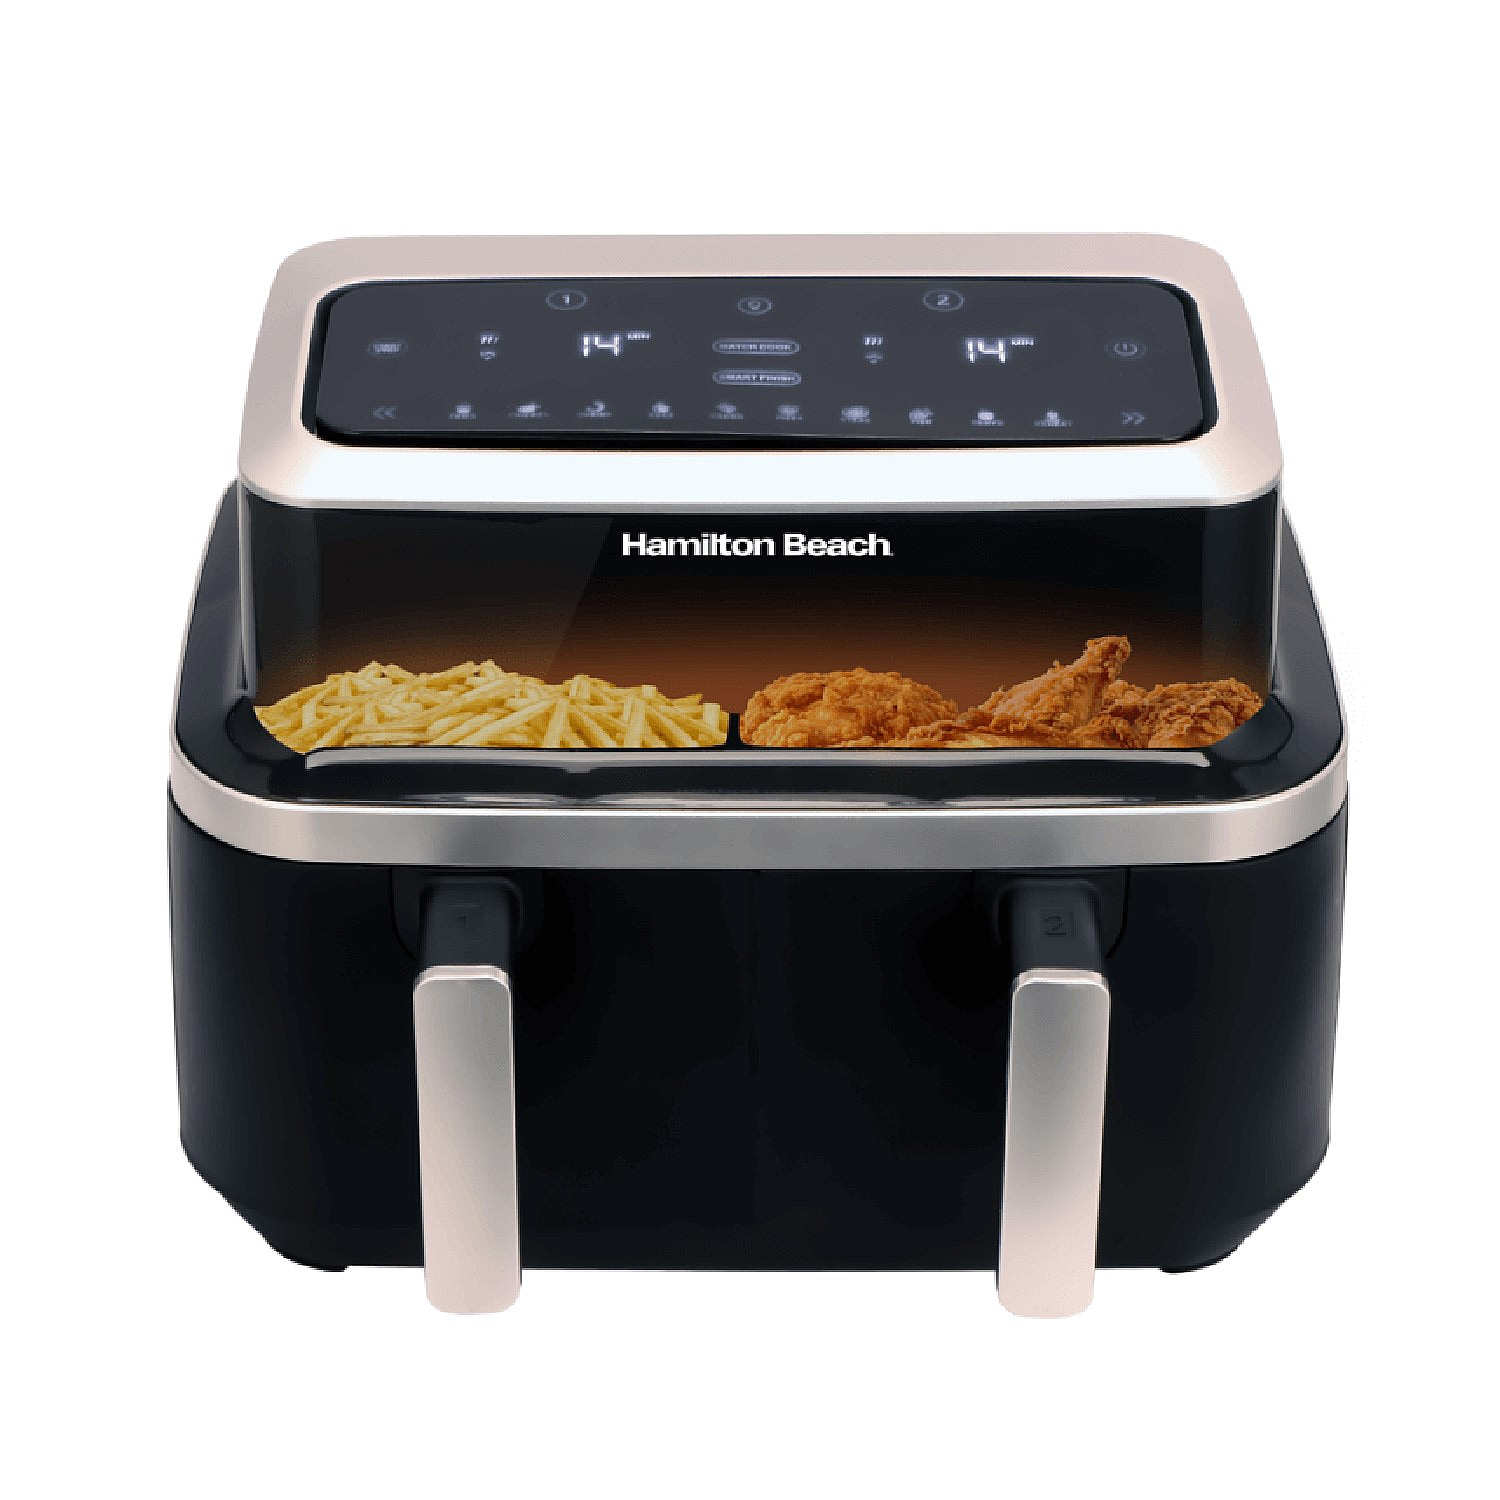 Hamilton Beach Vision Cook Dual Air Fryer (Capacity 9L) - Roast, Crisp, Bake - Healthier, Economic Cooking - Black